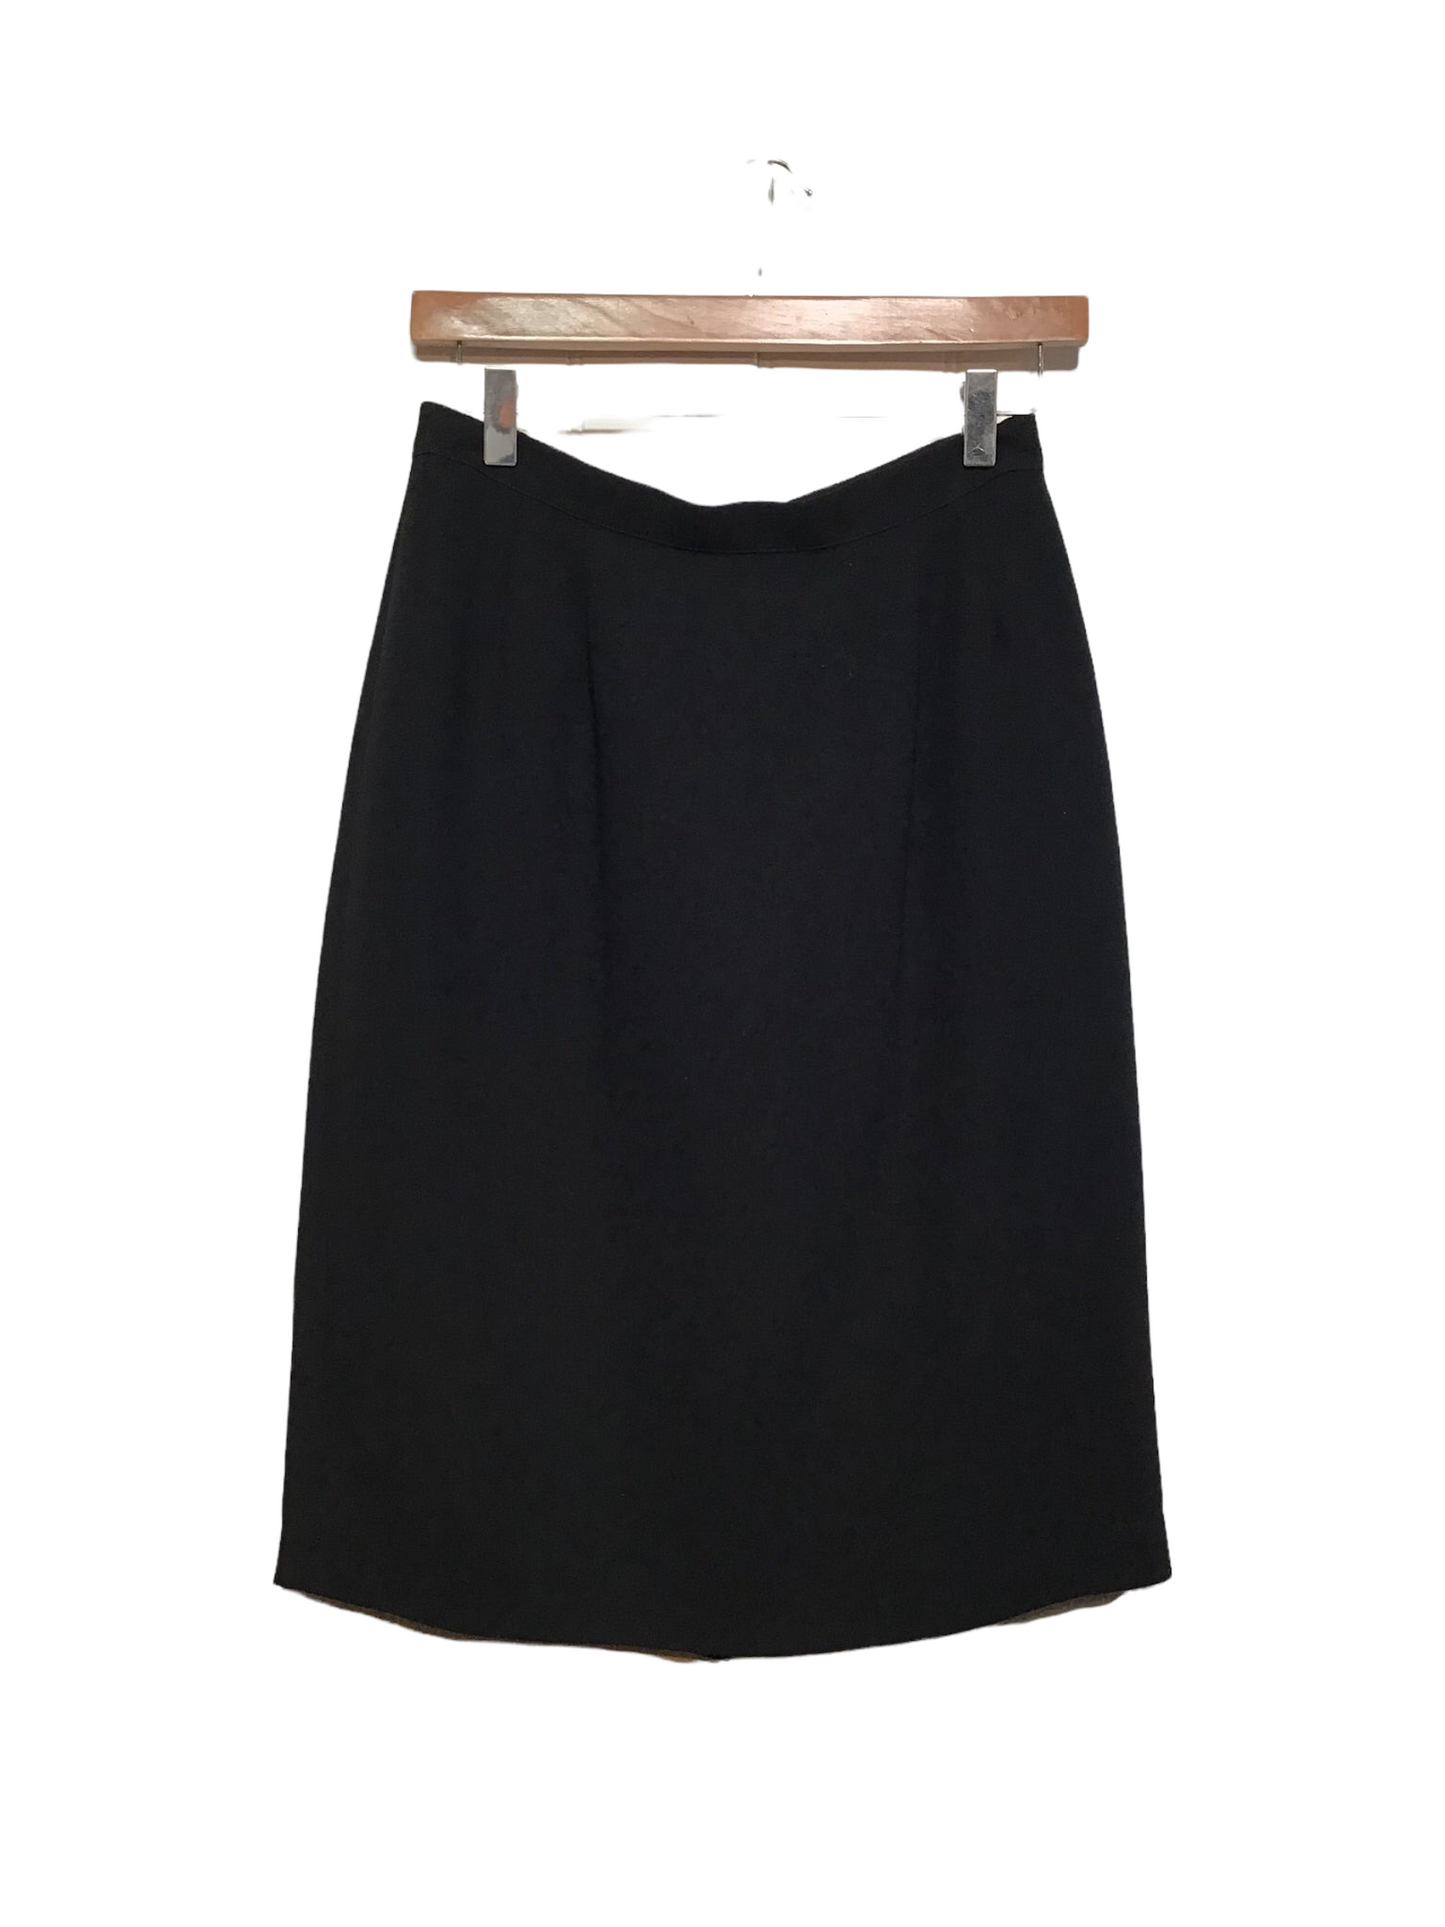 Black Midi Skirt (Size S)